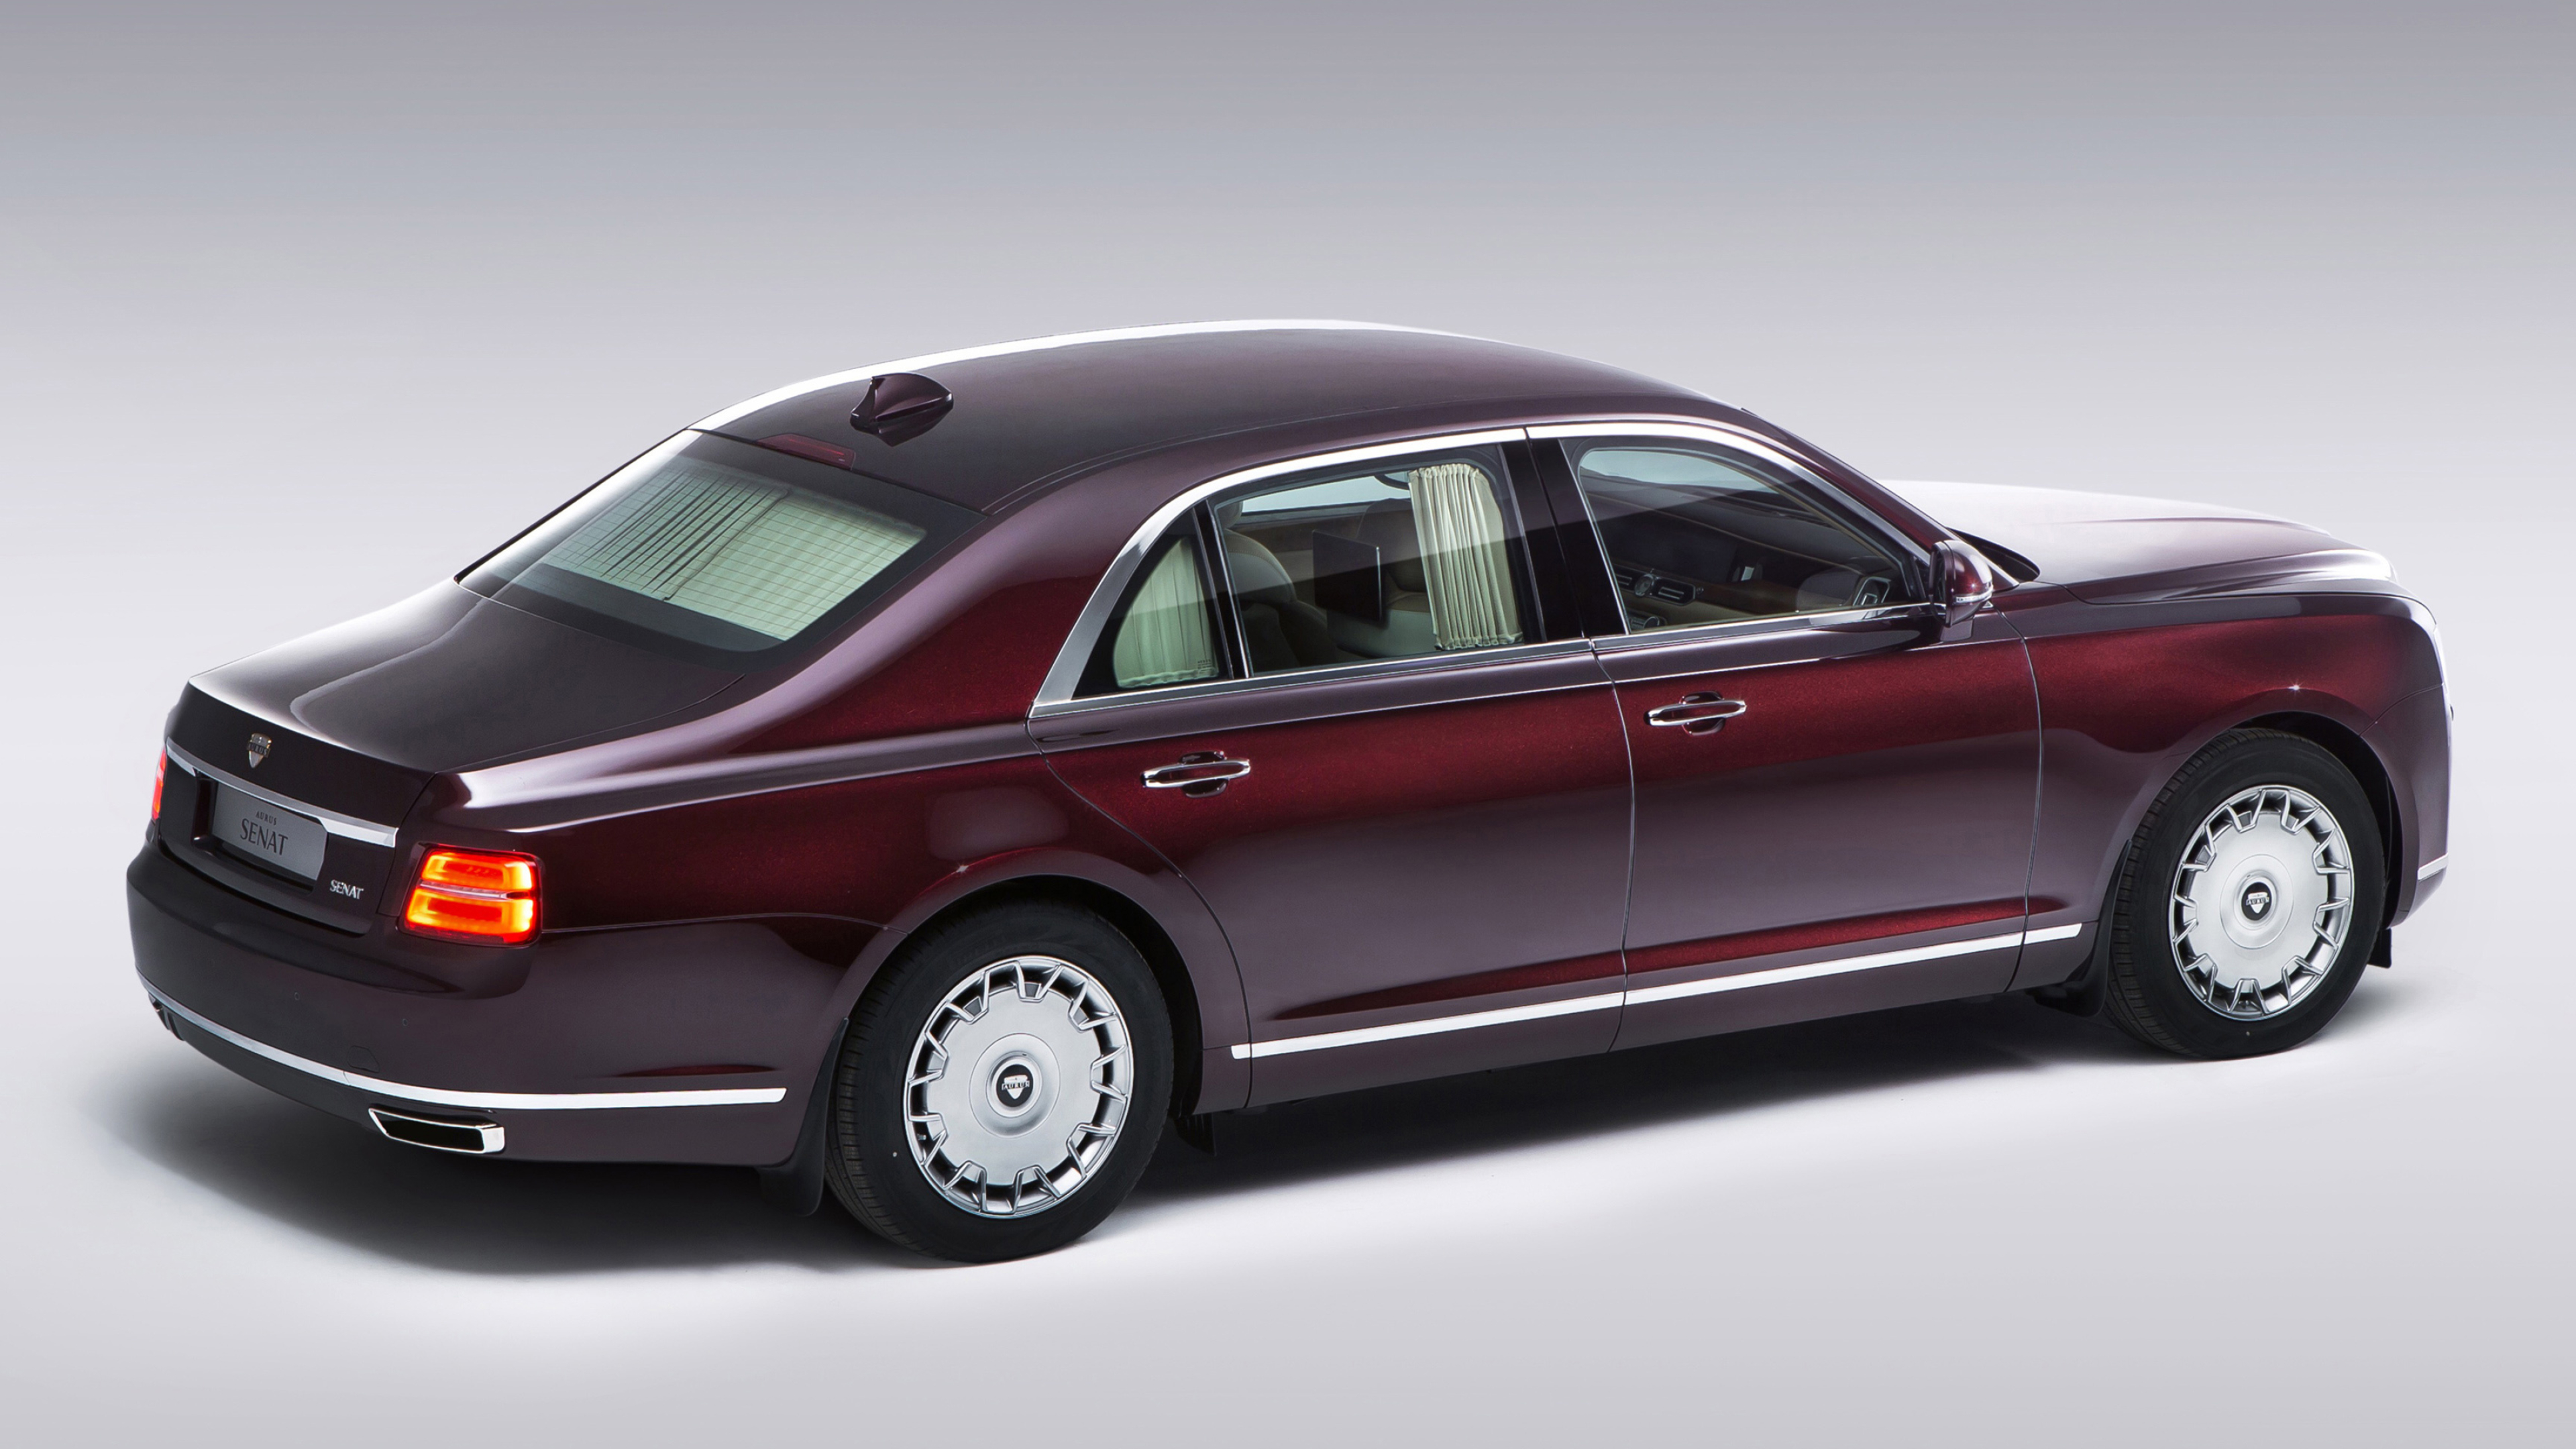 Aurus Senat, Luxury car, S600 model, Cars desktop wallpapers, 3840x2160 4K Desktop